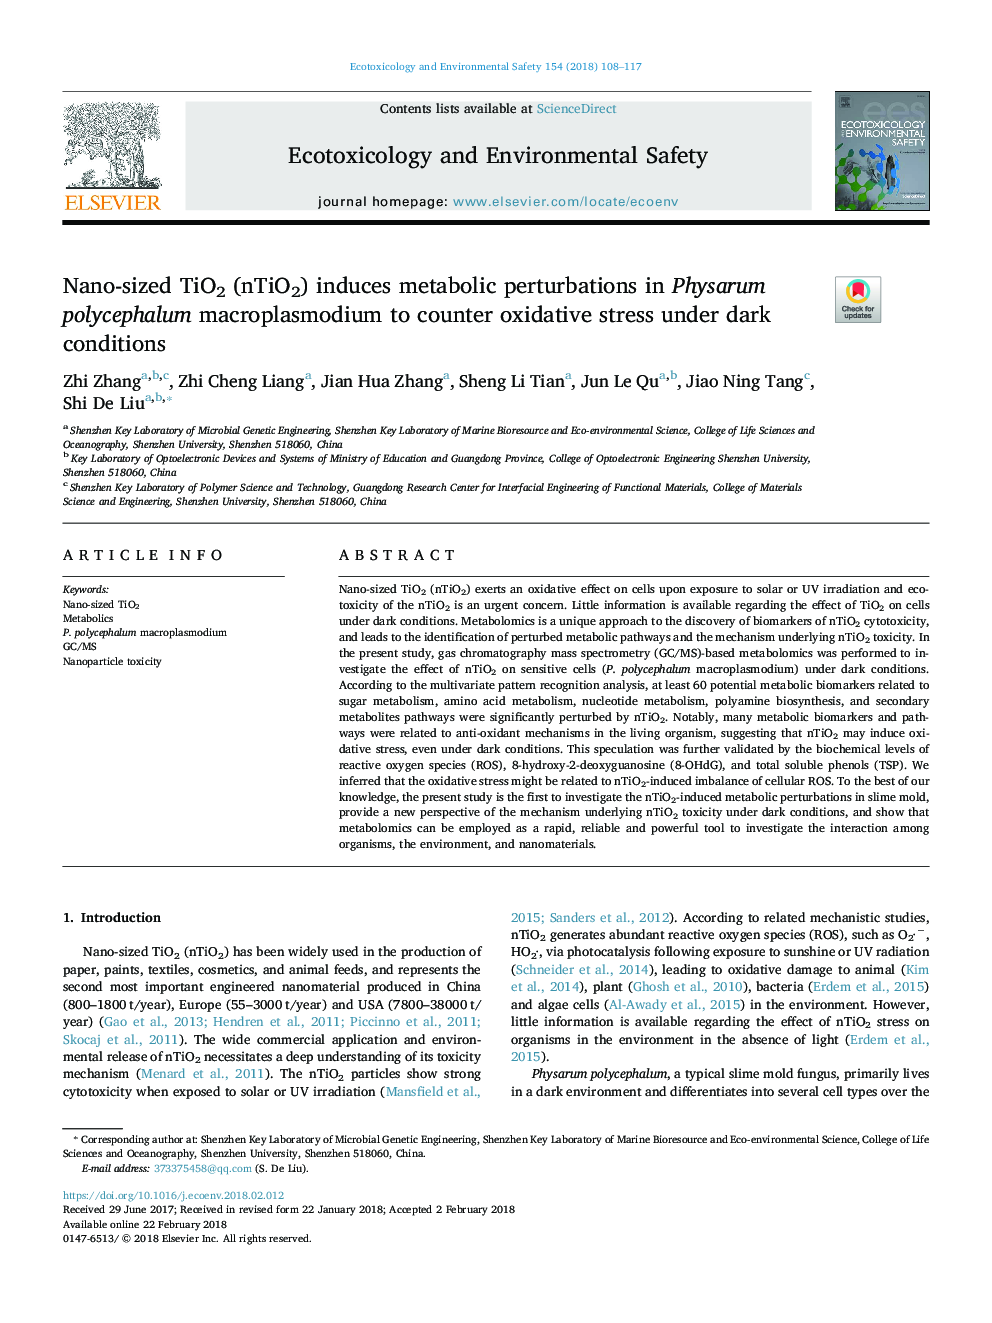 Nano-sized TiO2 (nTiO2) induces metabolic perturbations in Physarum polycephalum macroplasmodium to counter oxidative stress under dark conditions